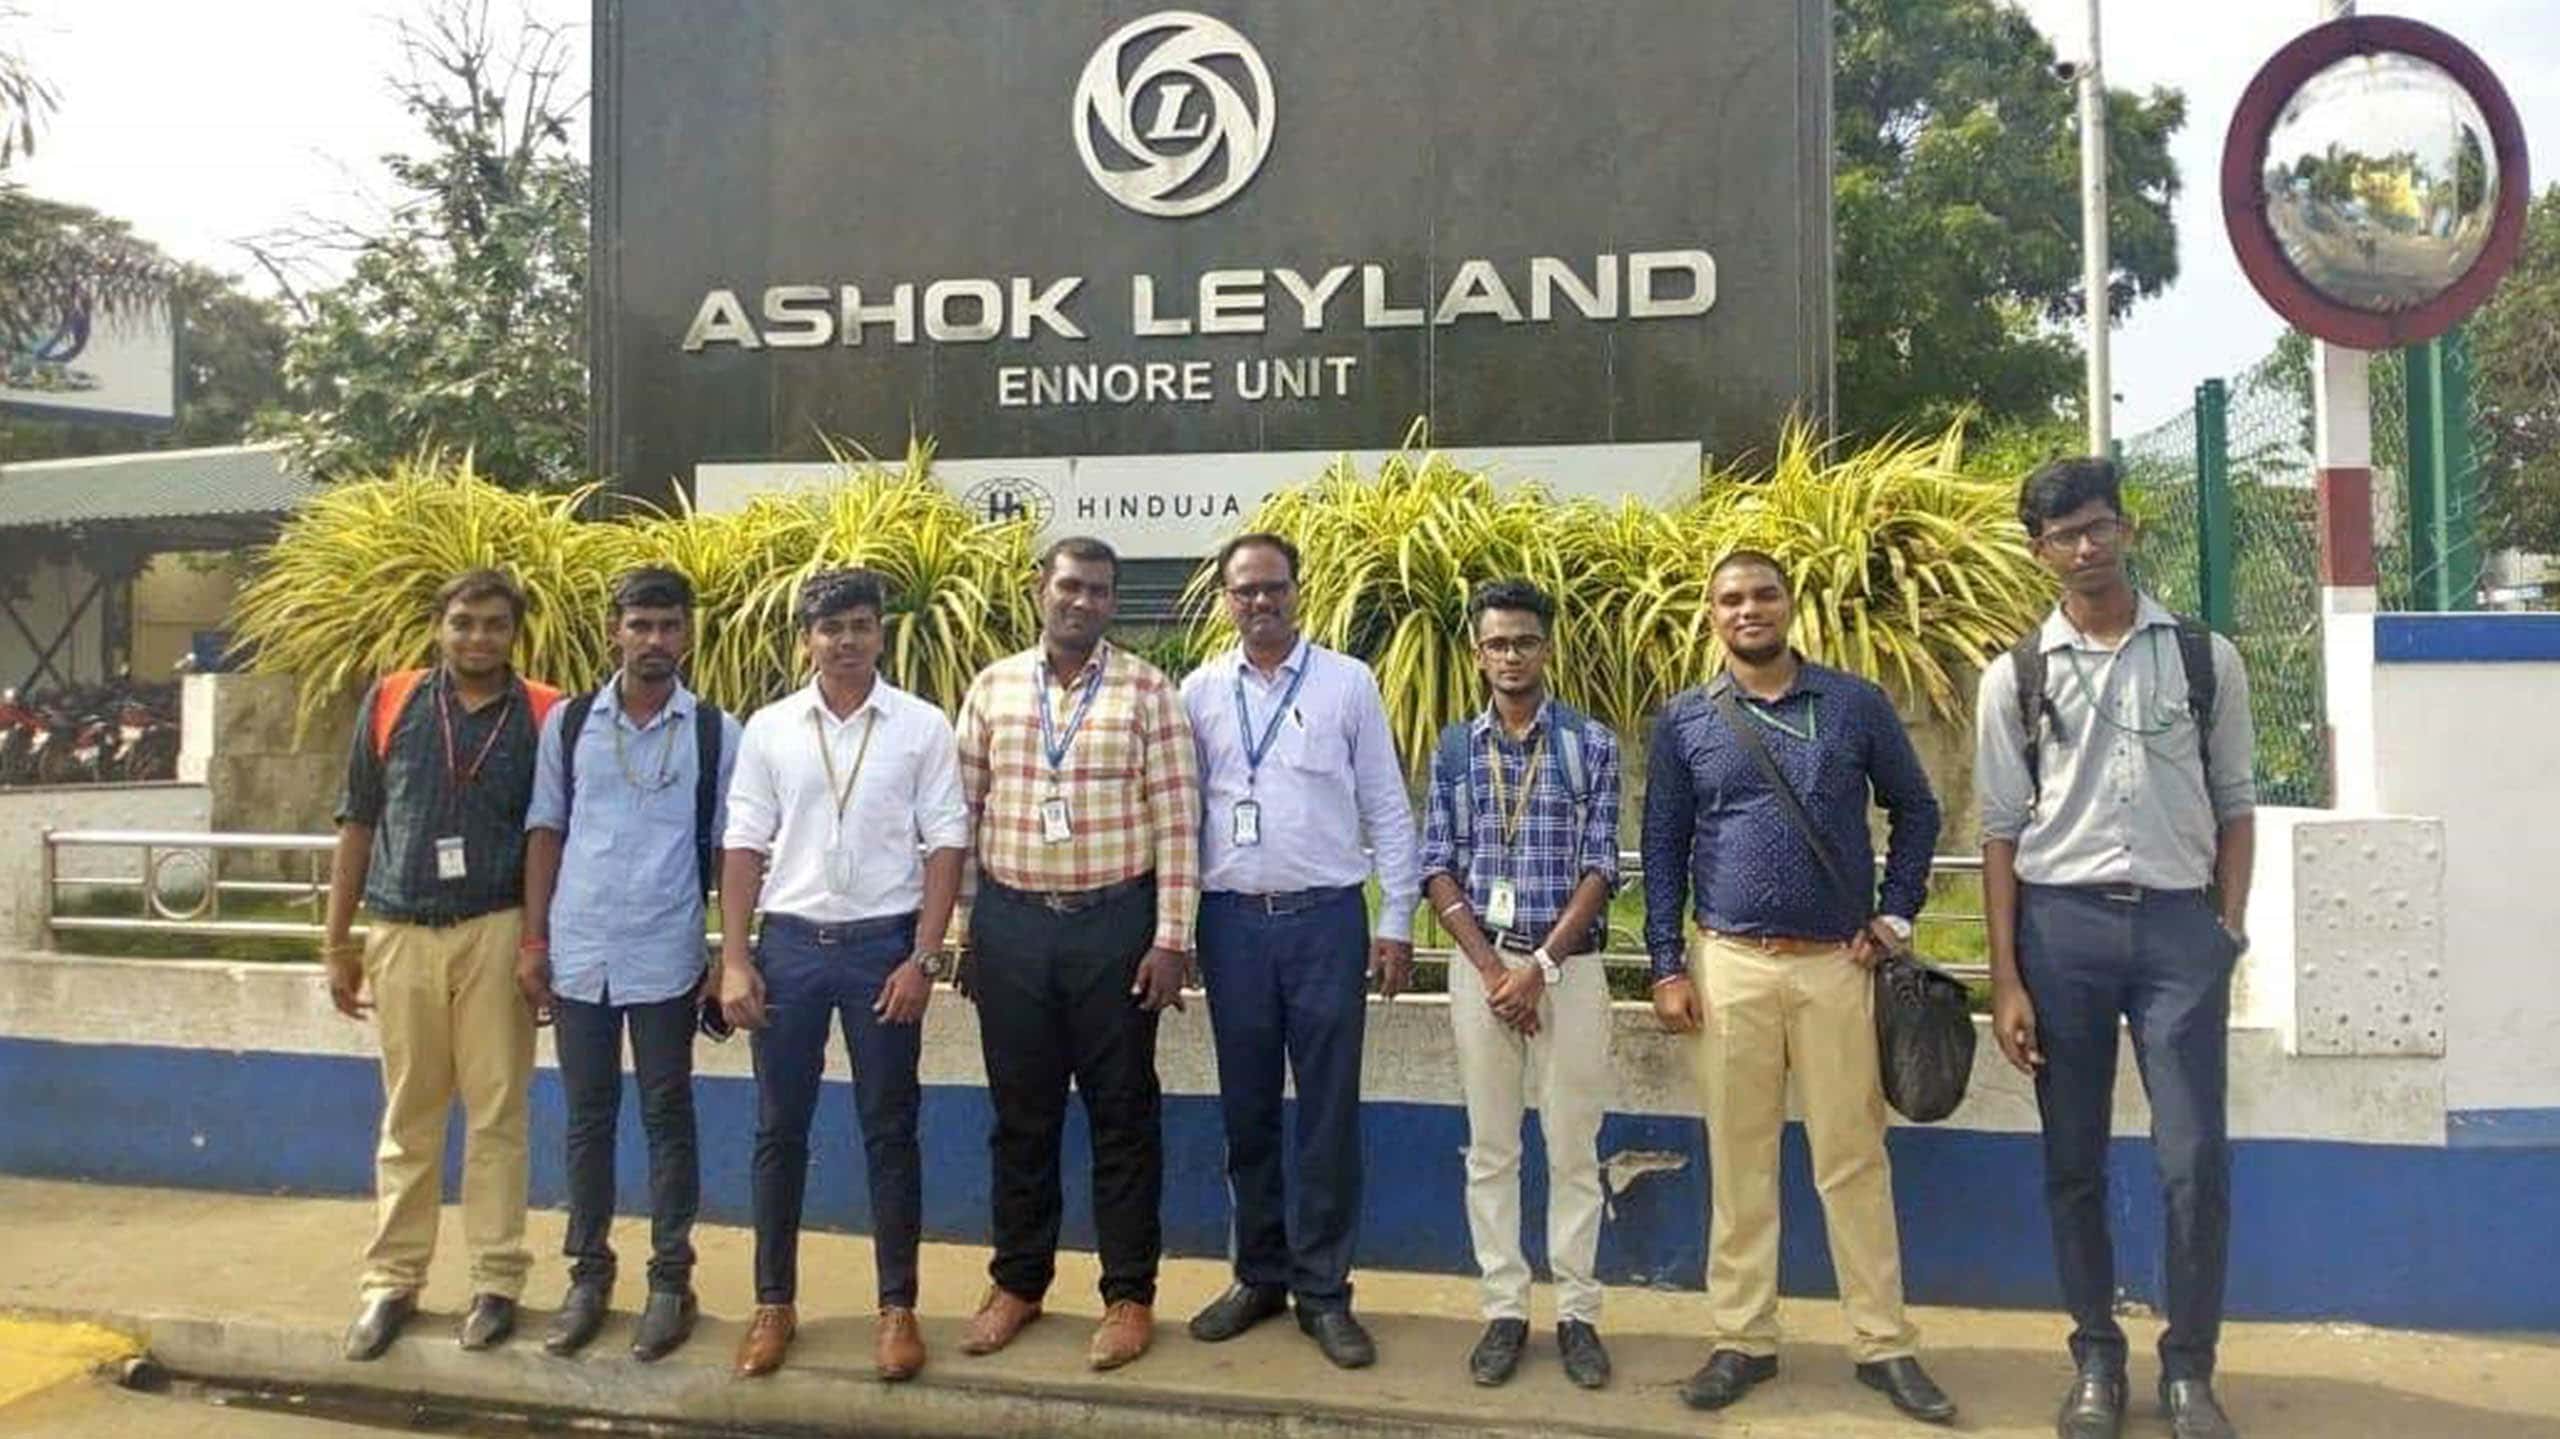 Students Industry oriented Design Projects @ Ashok Leyland, Ltd., Chennai